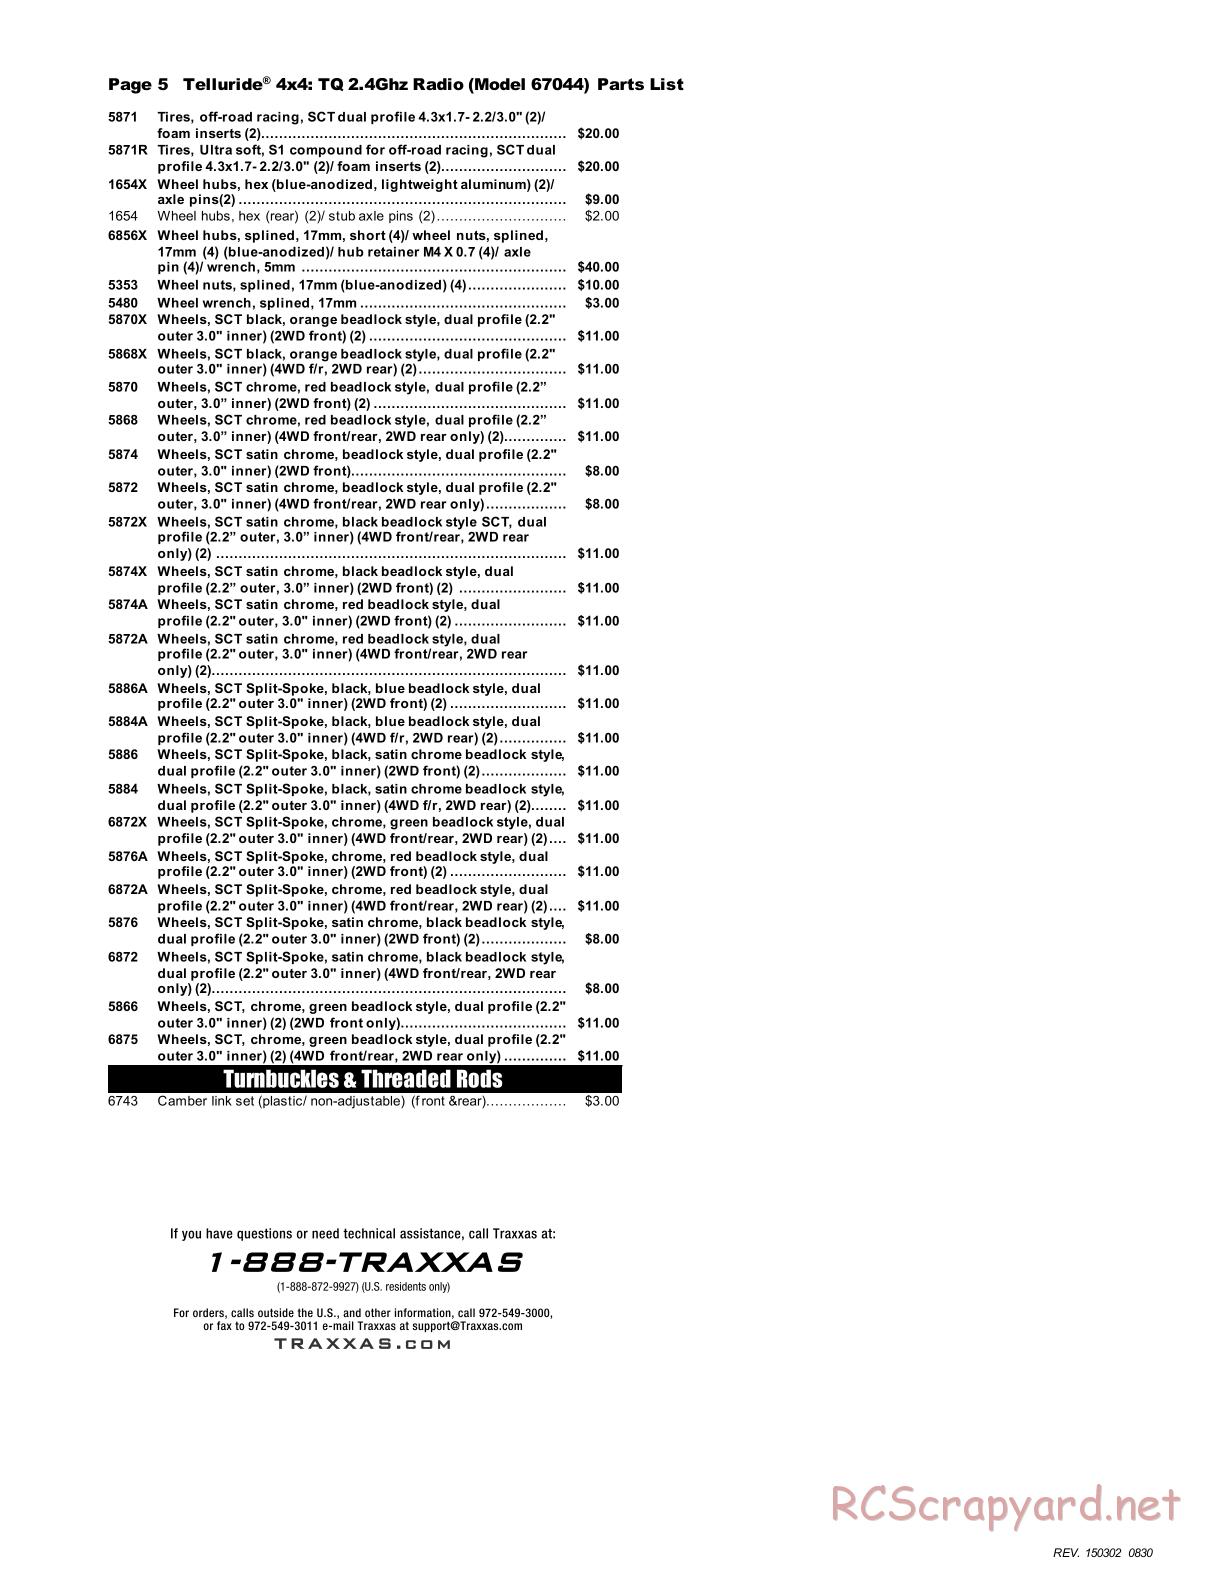 Traxxas - Telluride 4x4 (2013) - Parts List - Page 5